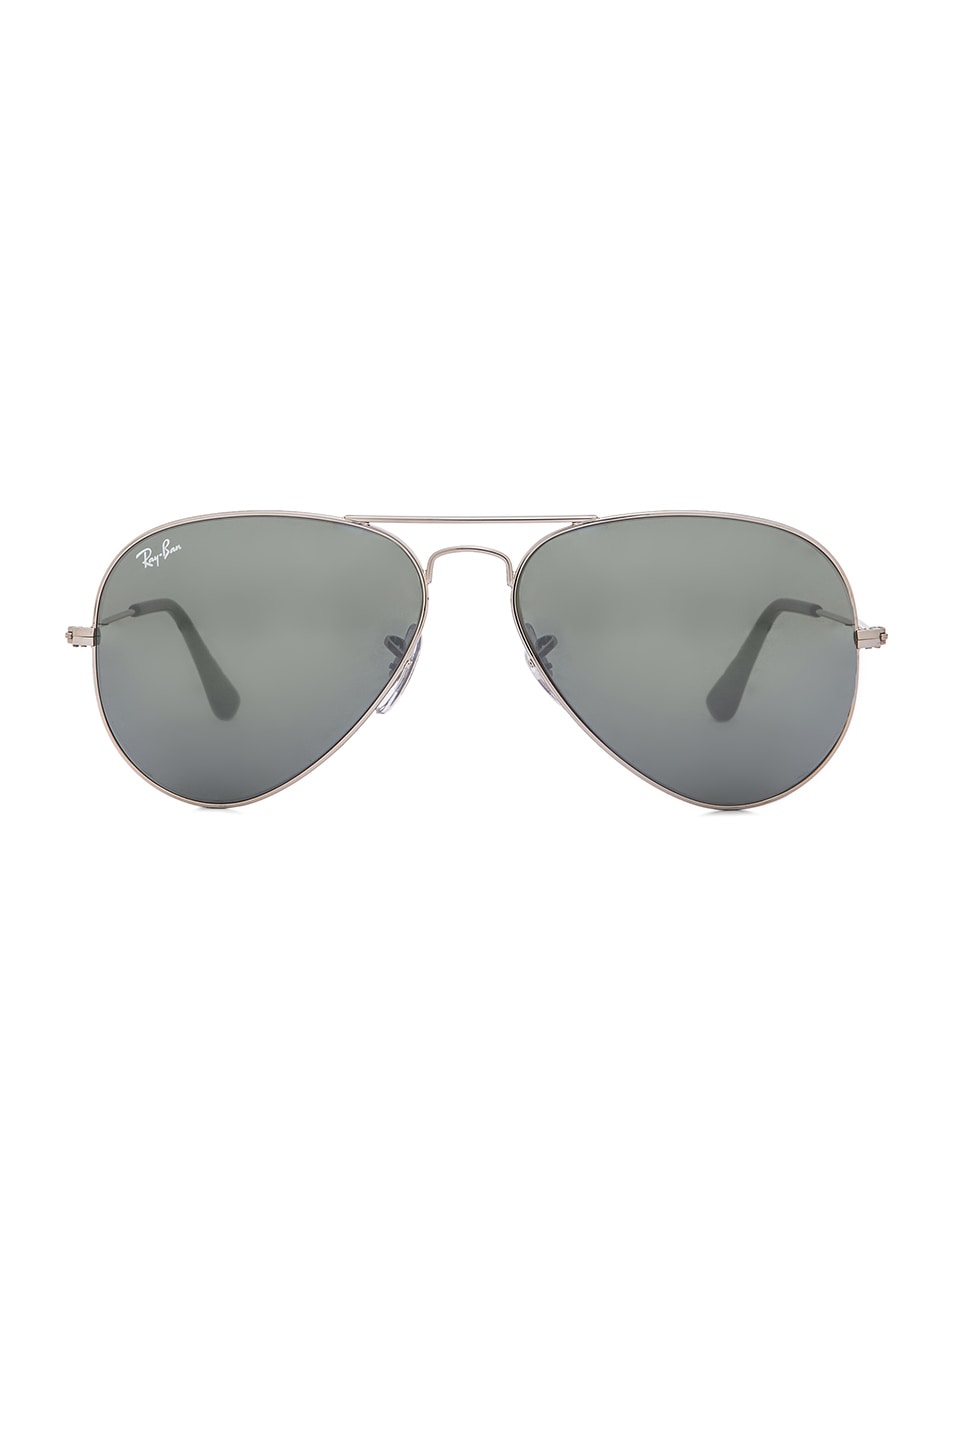 Ray-Ban Aviator Sunglasses in Silver Mirror | FWRD